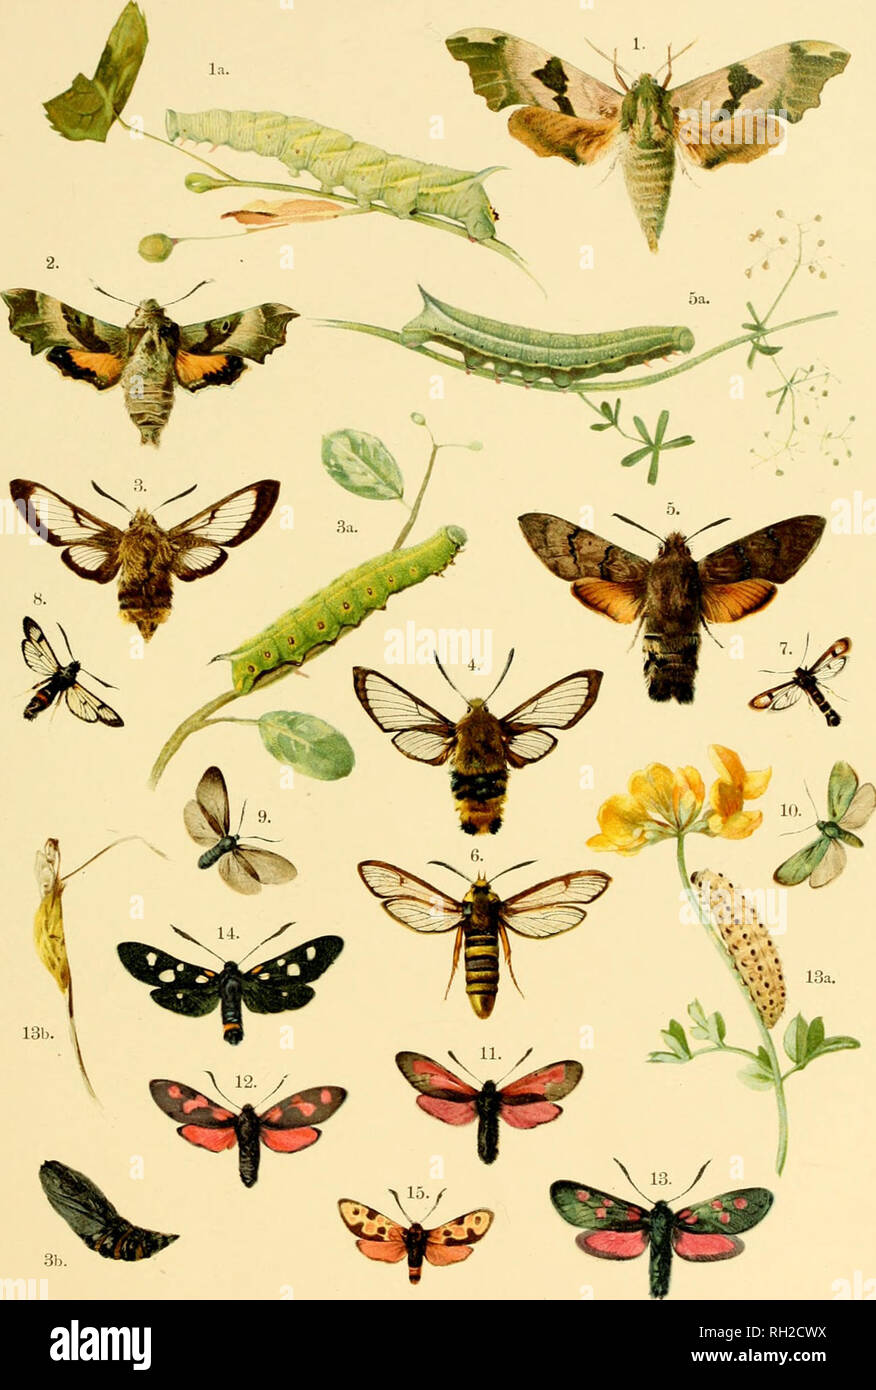 . Europei e britannici di farfalle e falene (Macrolepidoptera). Lepidoptera -- Gran Bretagna; Lepidoptera -- l'Europa. IM.ATE XVI.. I. Smerinthus tiliie, la. I,un'-a. 2. Pterogon proserpina. 3. Macroglossia fuciformis, 3a. Lar-a, 3b. Pupa. 4. Magroglossia bombyliformis. 5. Macroglossia stellatarum, 5 a. Larva. 6. Trochilium apiforme. -. Il Sesia tipuliformis. 8. Il Sesia culiciformis. g. Ino pruni. 10. Ino stadces. II. Zygaena minos. 12. Zygsna achillese. 13. Zygtena trifolii, 13a. Lana, 13b. Pupa. 14. Zygaena epialtes. var. trigonelte. 15. ZygajDa fausta. Europei e britannici di farfalle e falene.. Foto Stock